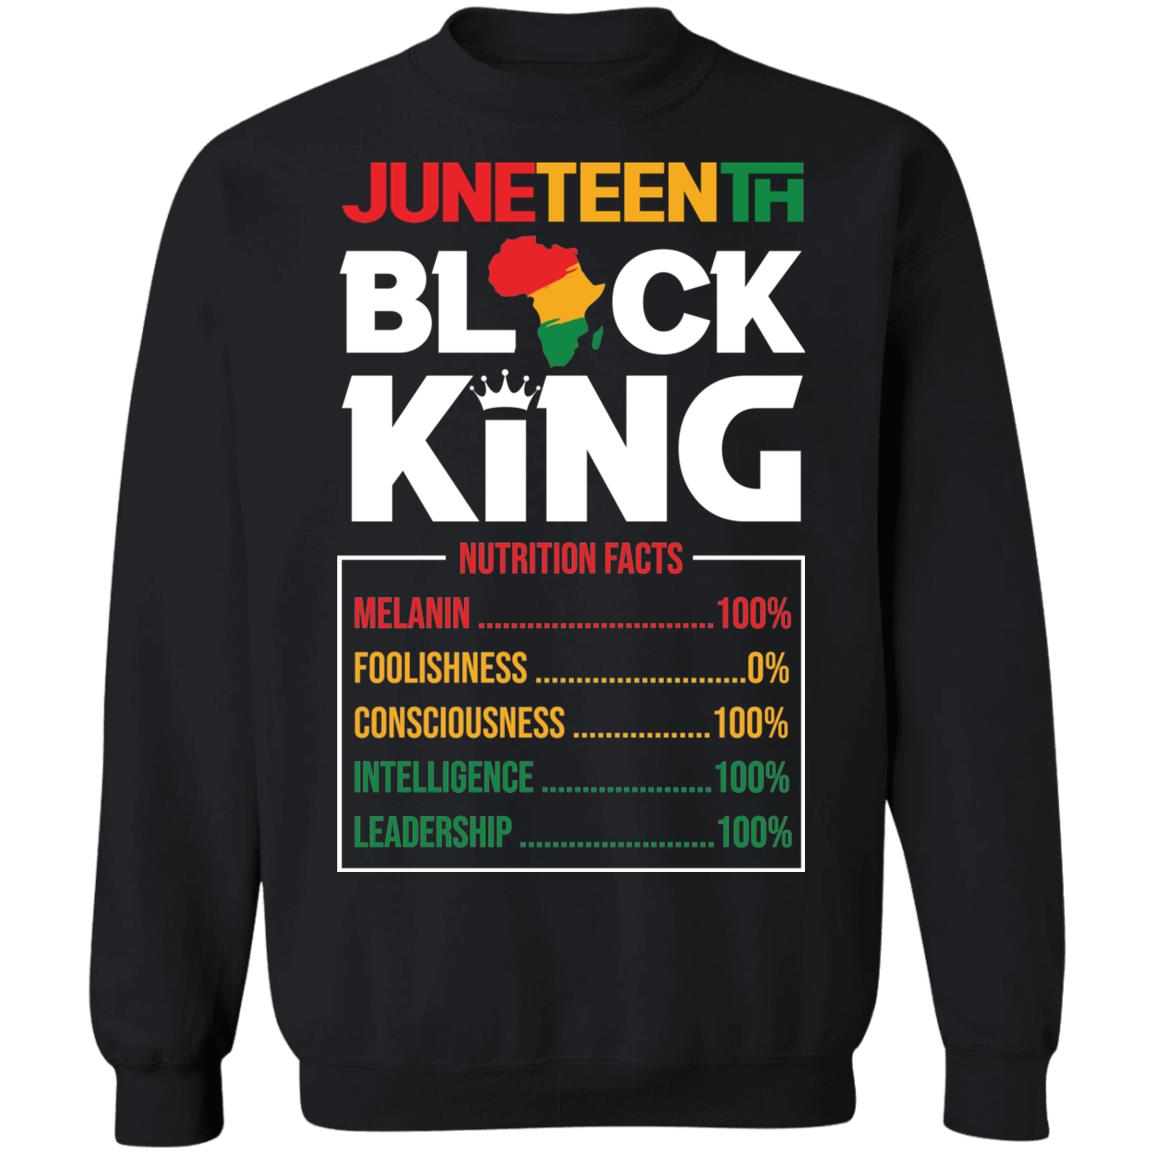 MNF - Juneteenth Black King Nutrition Facts T-shirt Apparel CustomCat Crewneck Sweatshirt Black S